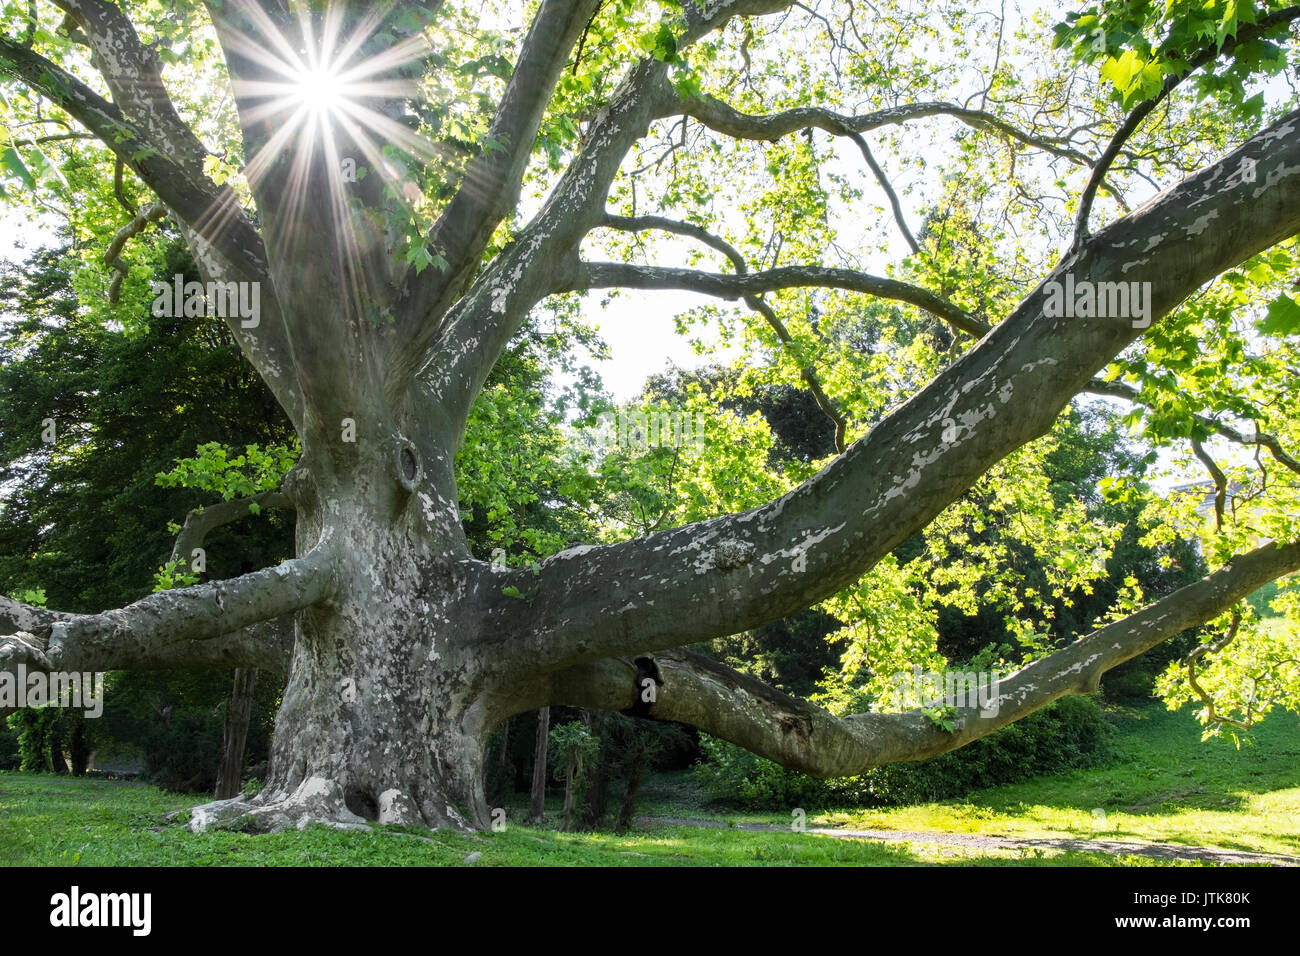 Old platanus tree in summer park Stock Photo